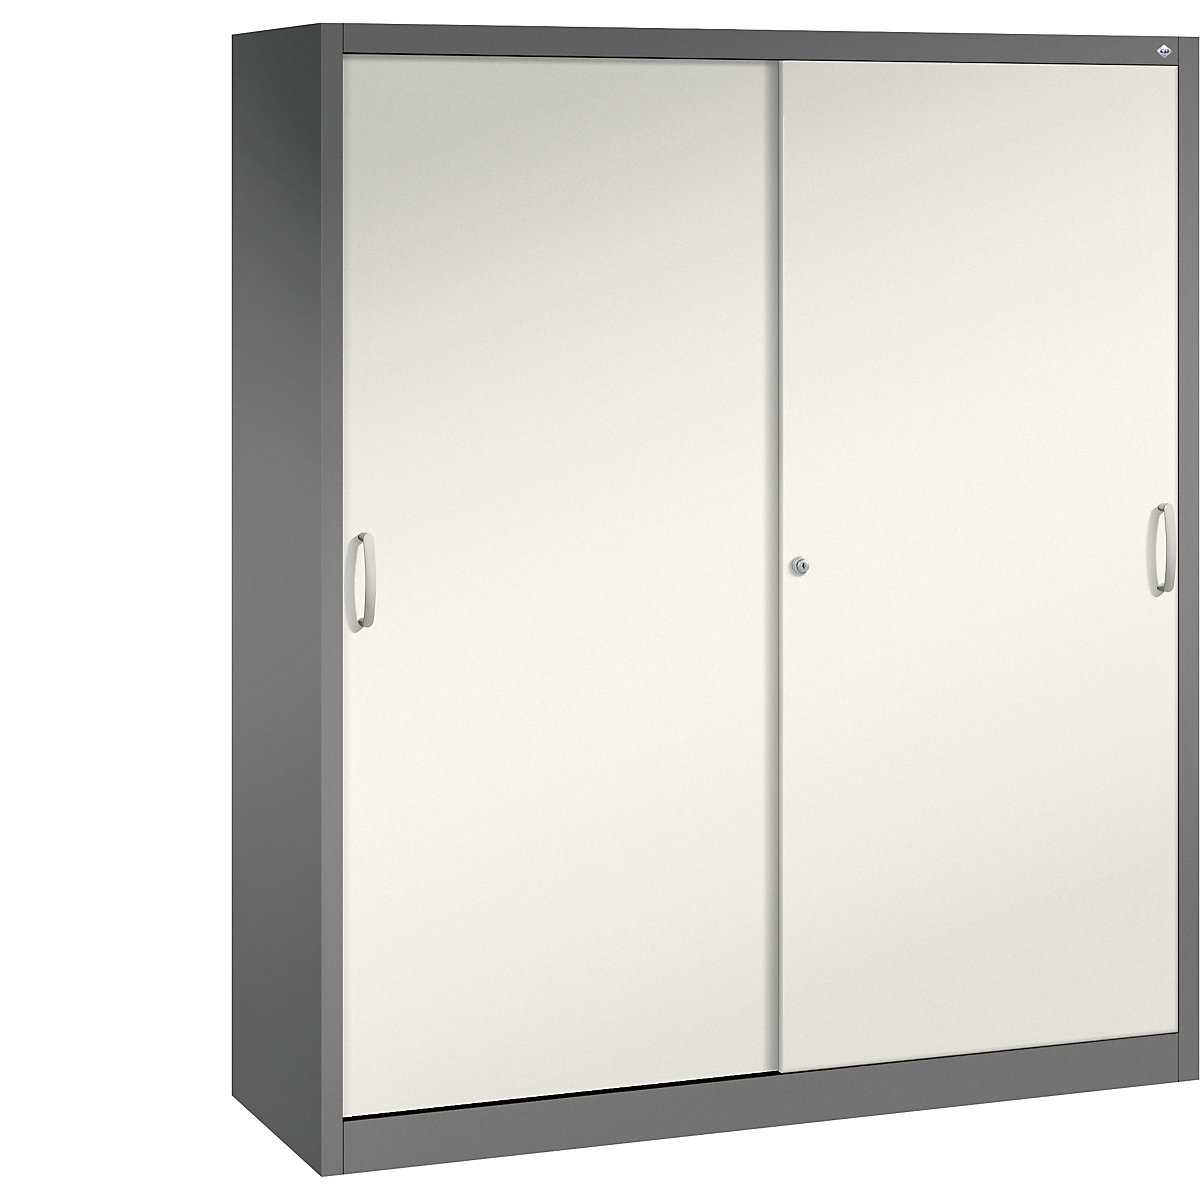 ACURADO sliding door cupboard – C+P, 6 shelves, 2 lockers, HxWxD 1950 x 1600 x 500 mm, volcanic grey / oyster white-15